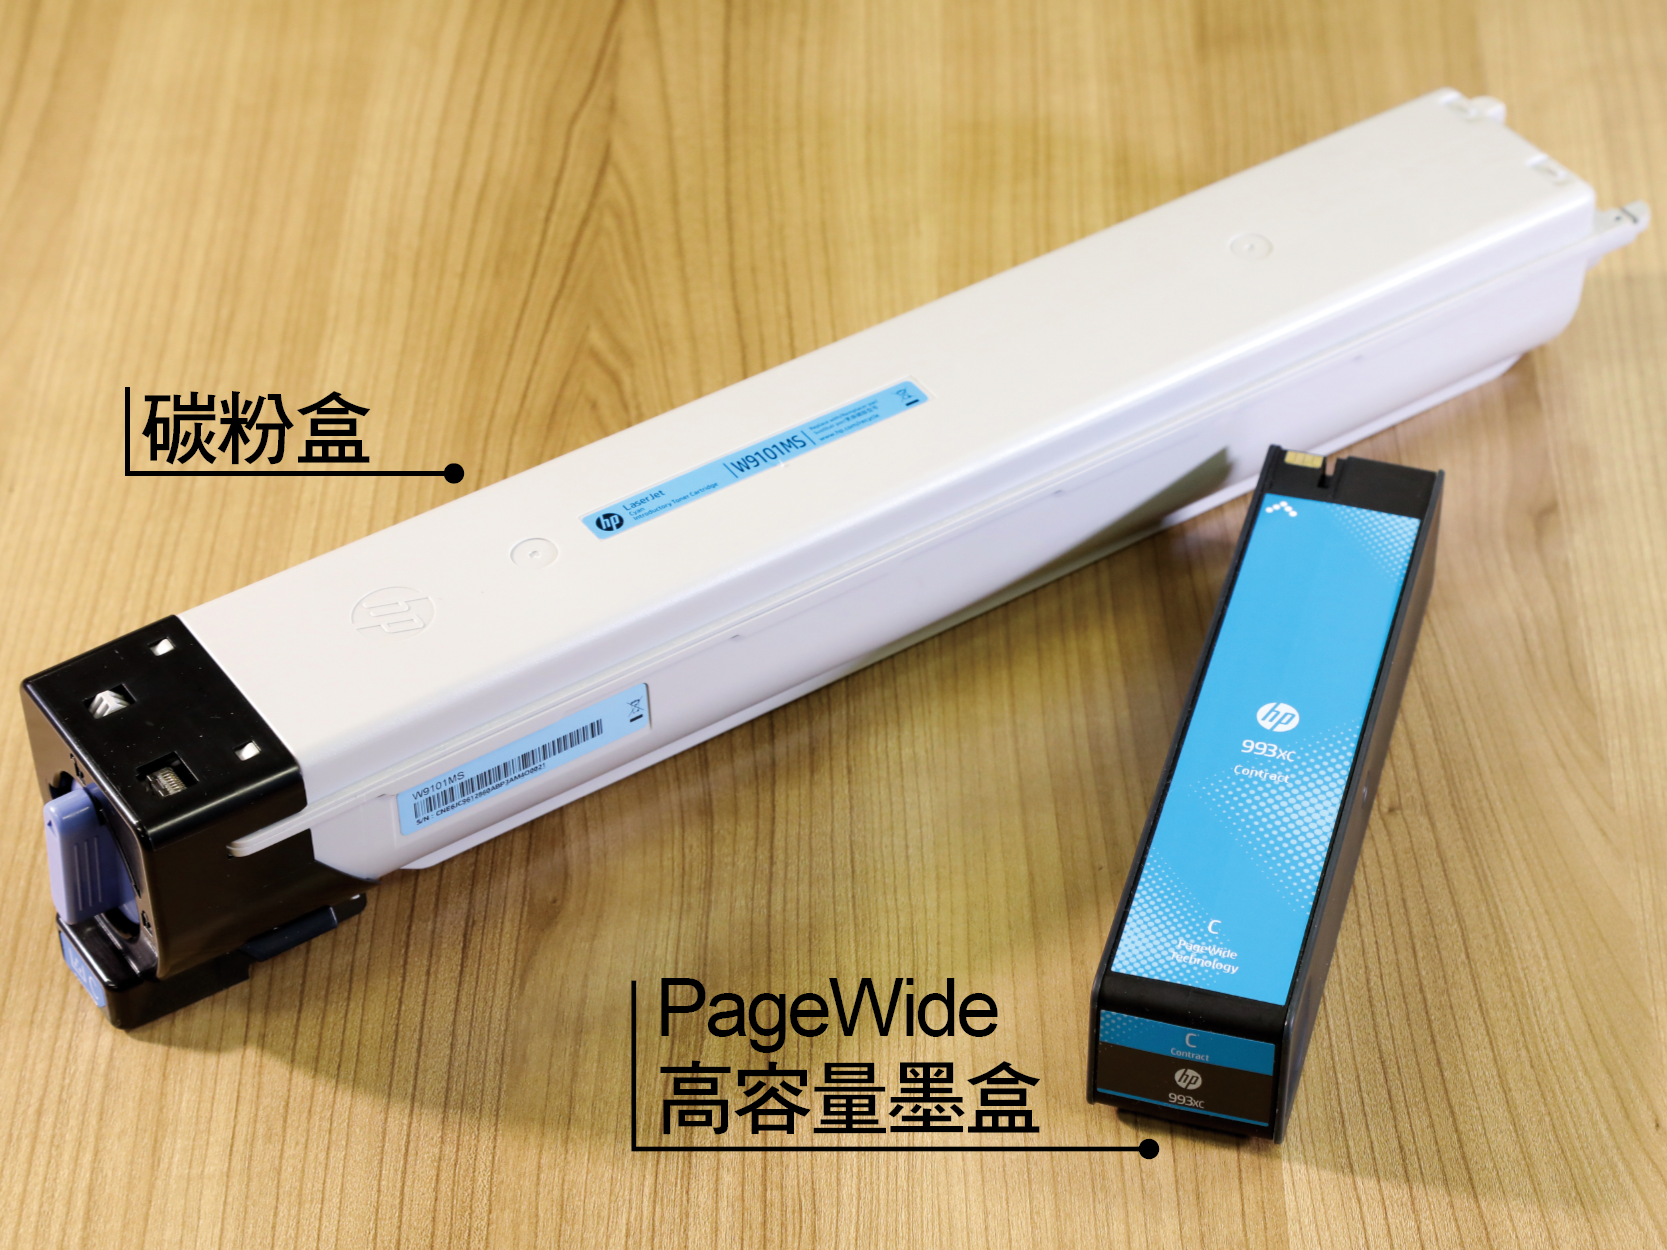 PageWide 打印機採用顏料性墨水，高容量墨盒體積細小，比傳統碳粉盒細大半。